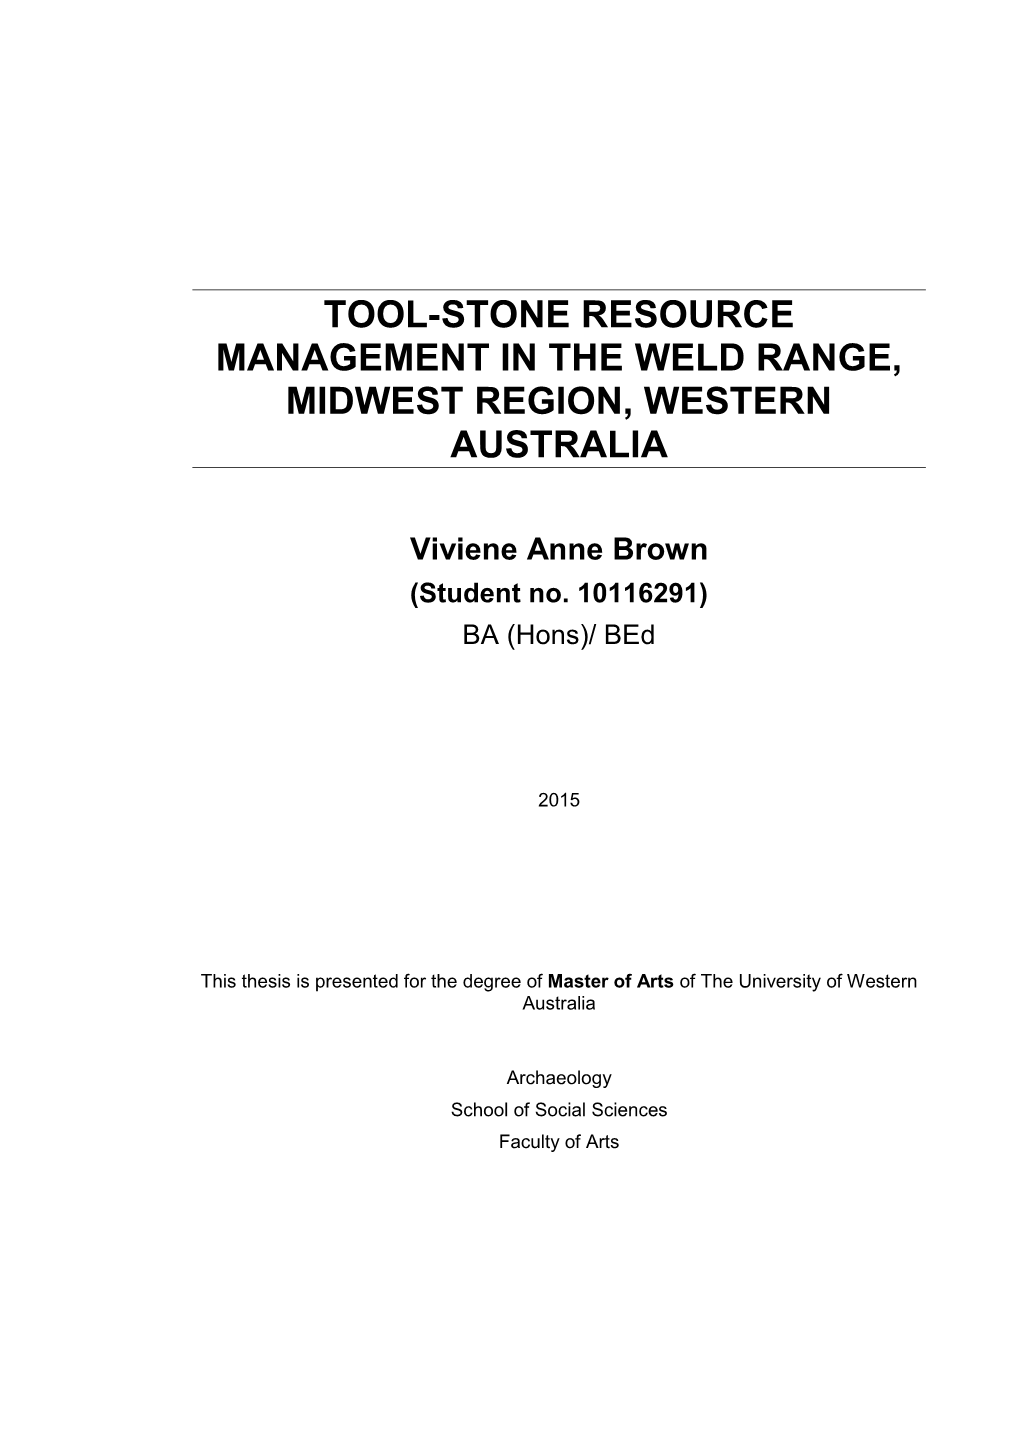 Tool-Stone Resource Management in the Weld Range, Midwest Region, Western Australia